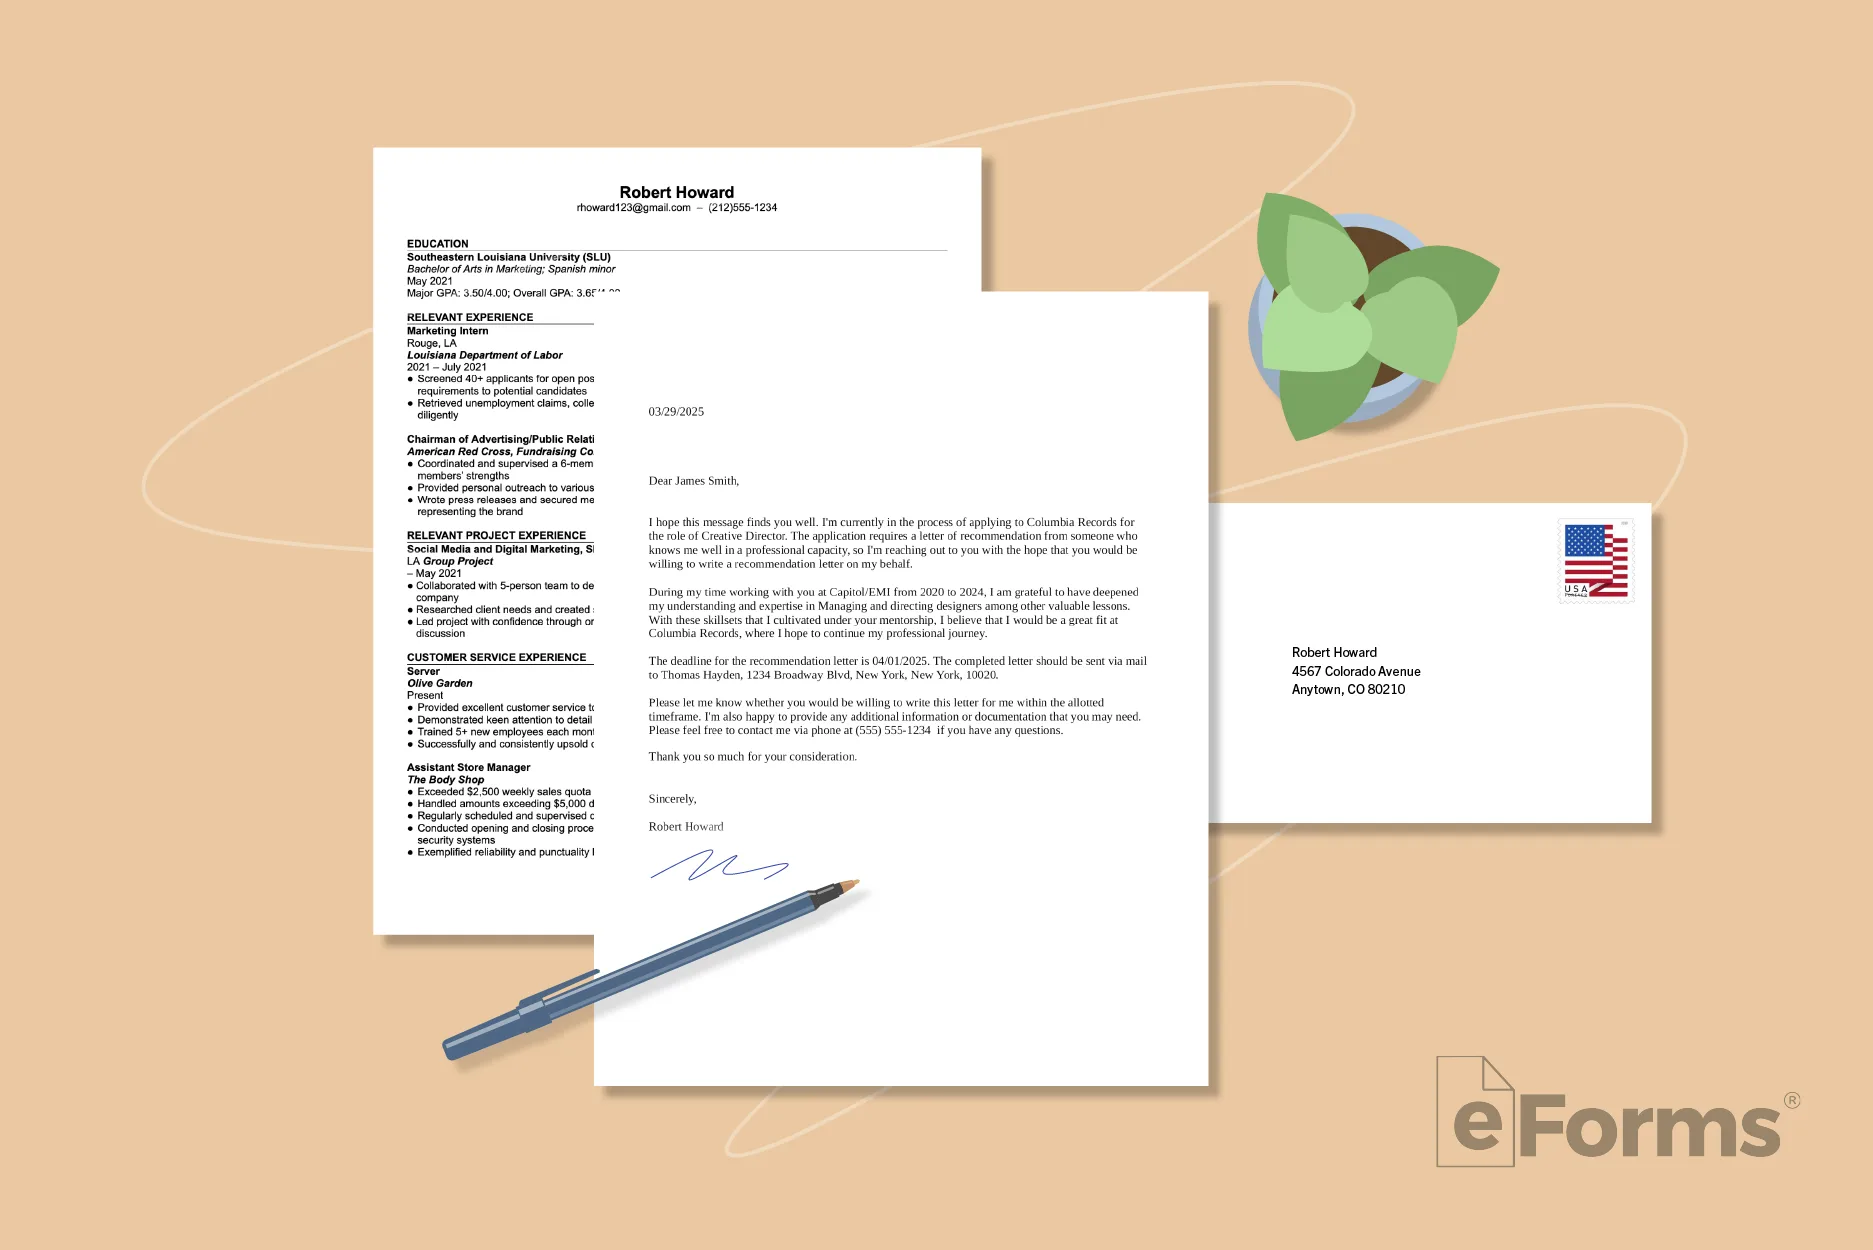 Referral letter, resume, and self addressed stamped envelope.